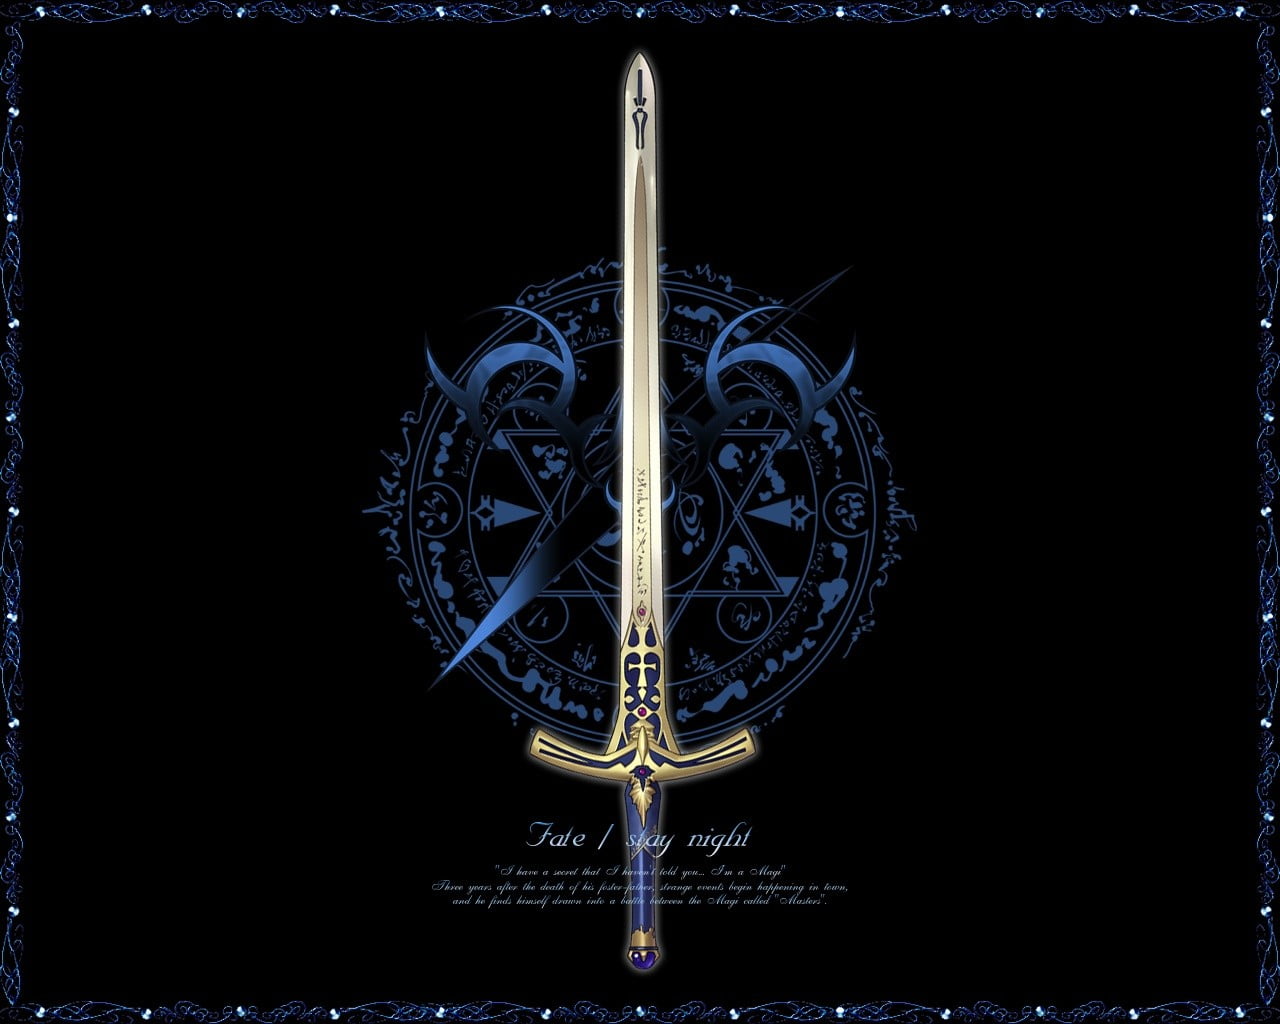 Fate: Stay Night Excalibur digital wallpaper, sword, fantasy art, Fate/Stay Night